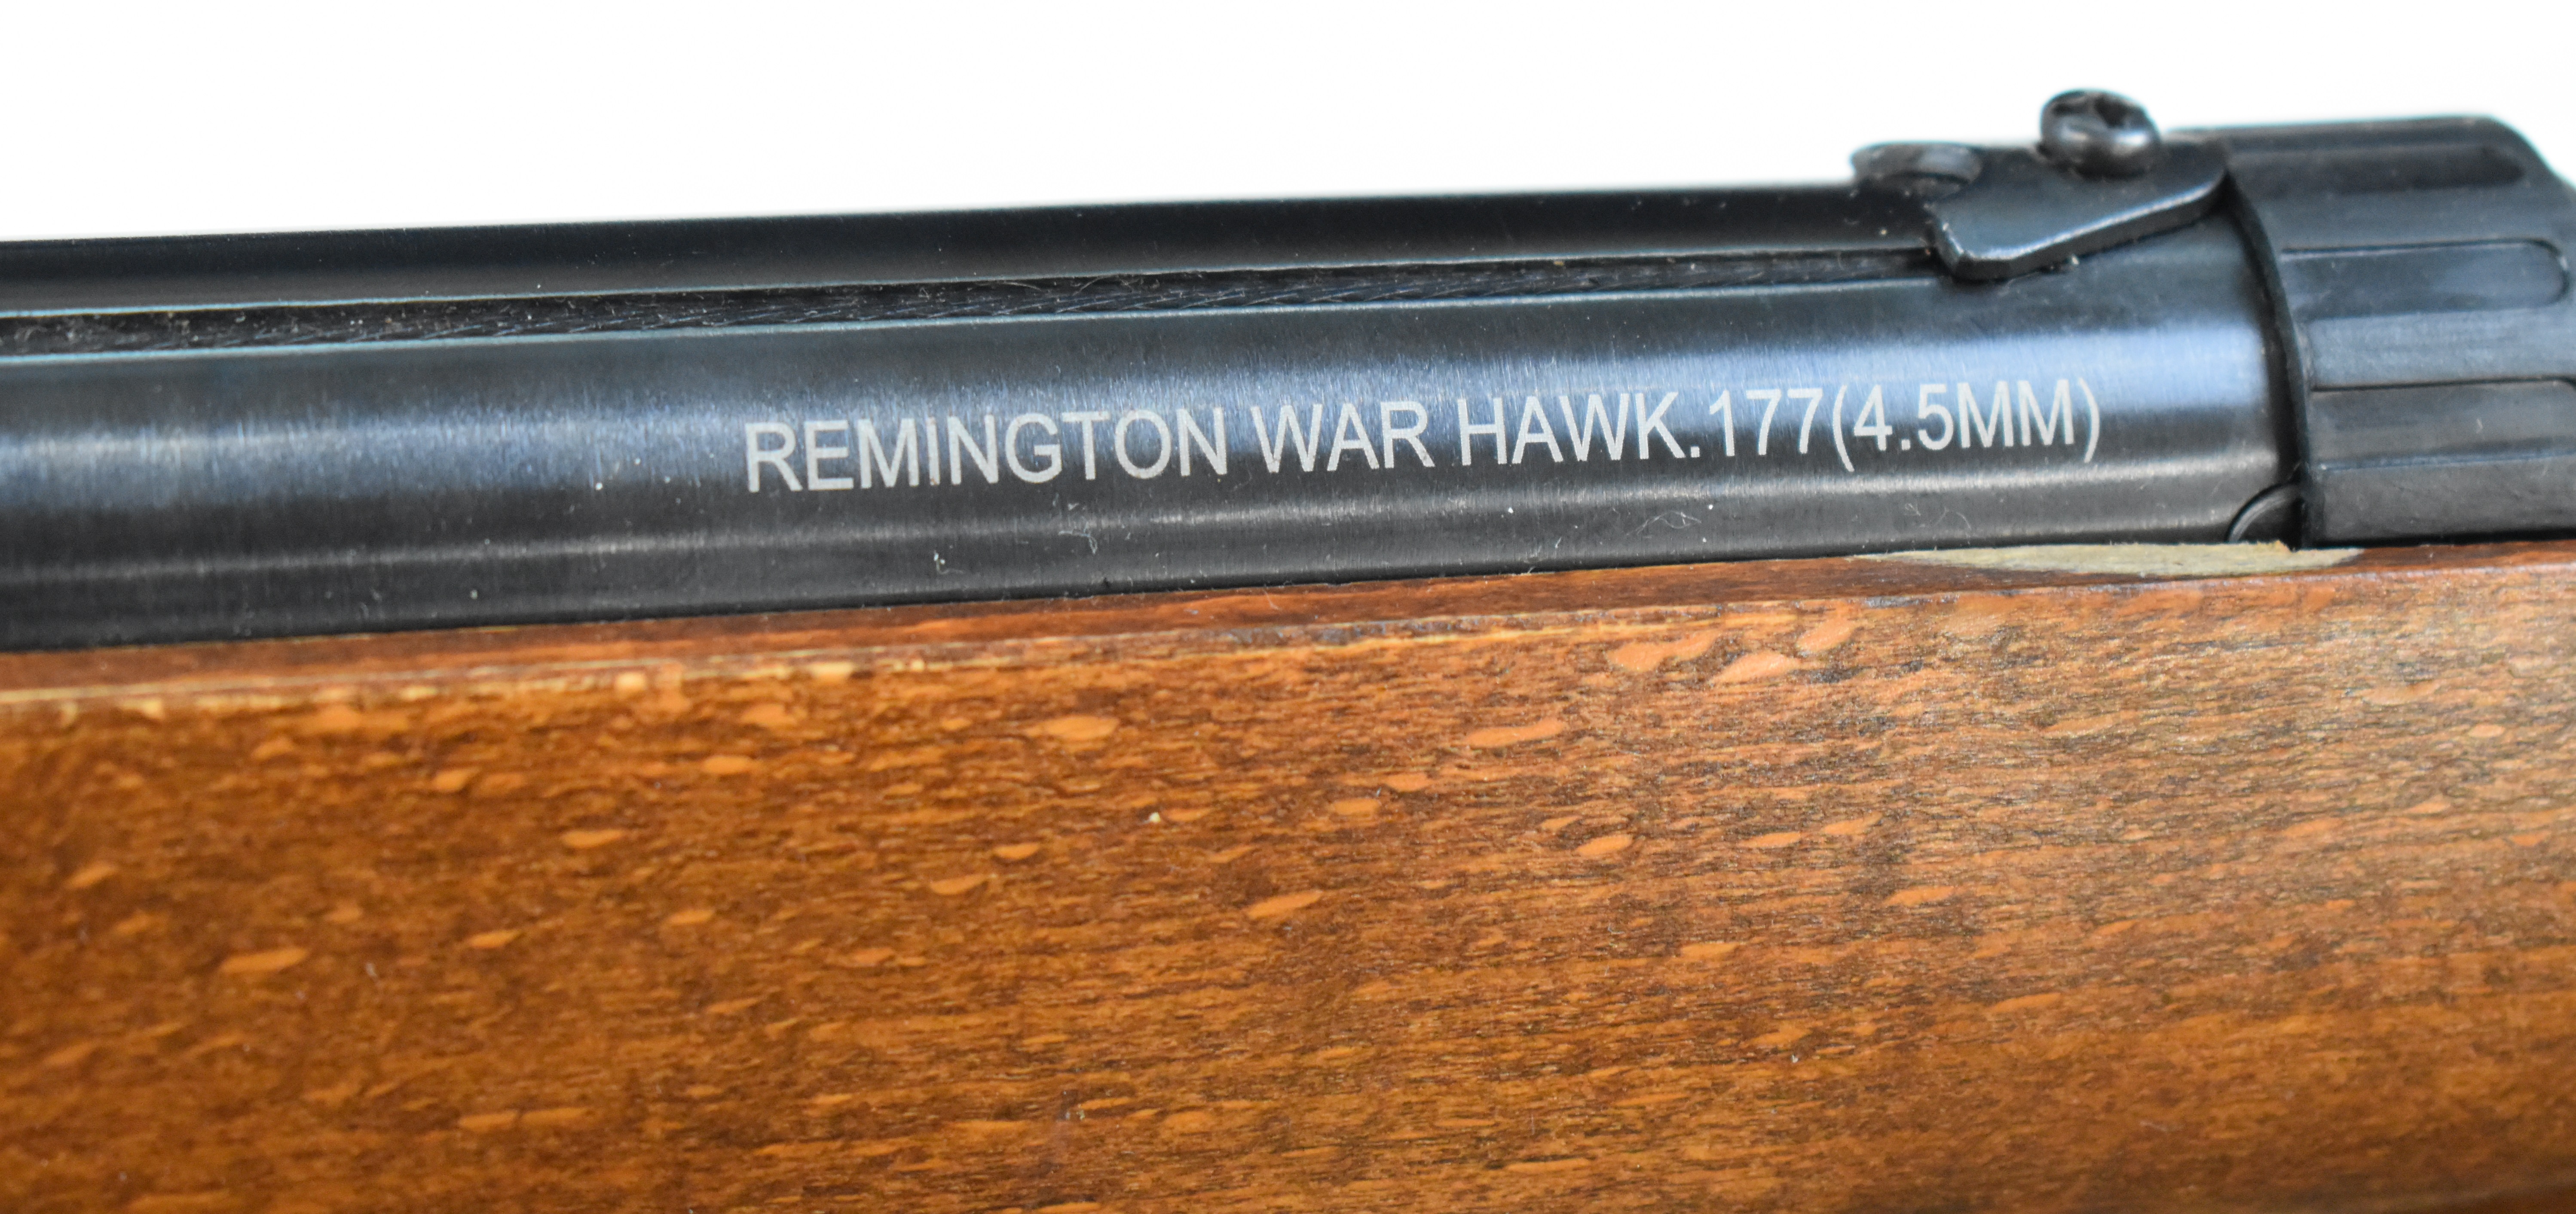 Remington Warhawk .177 under-lever air rifle with textured semi-pistol grip, raised cheek piece - Image 11 of 11